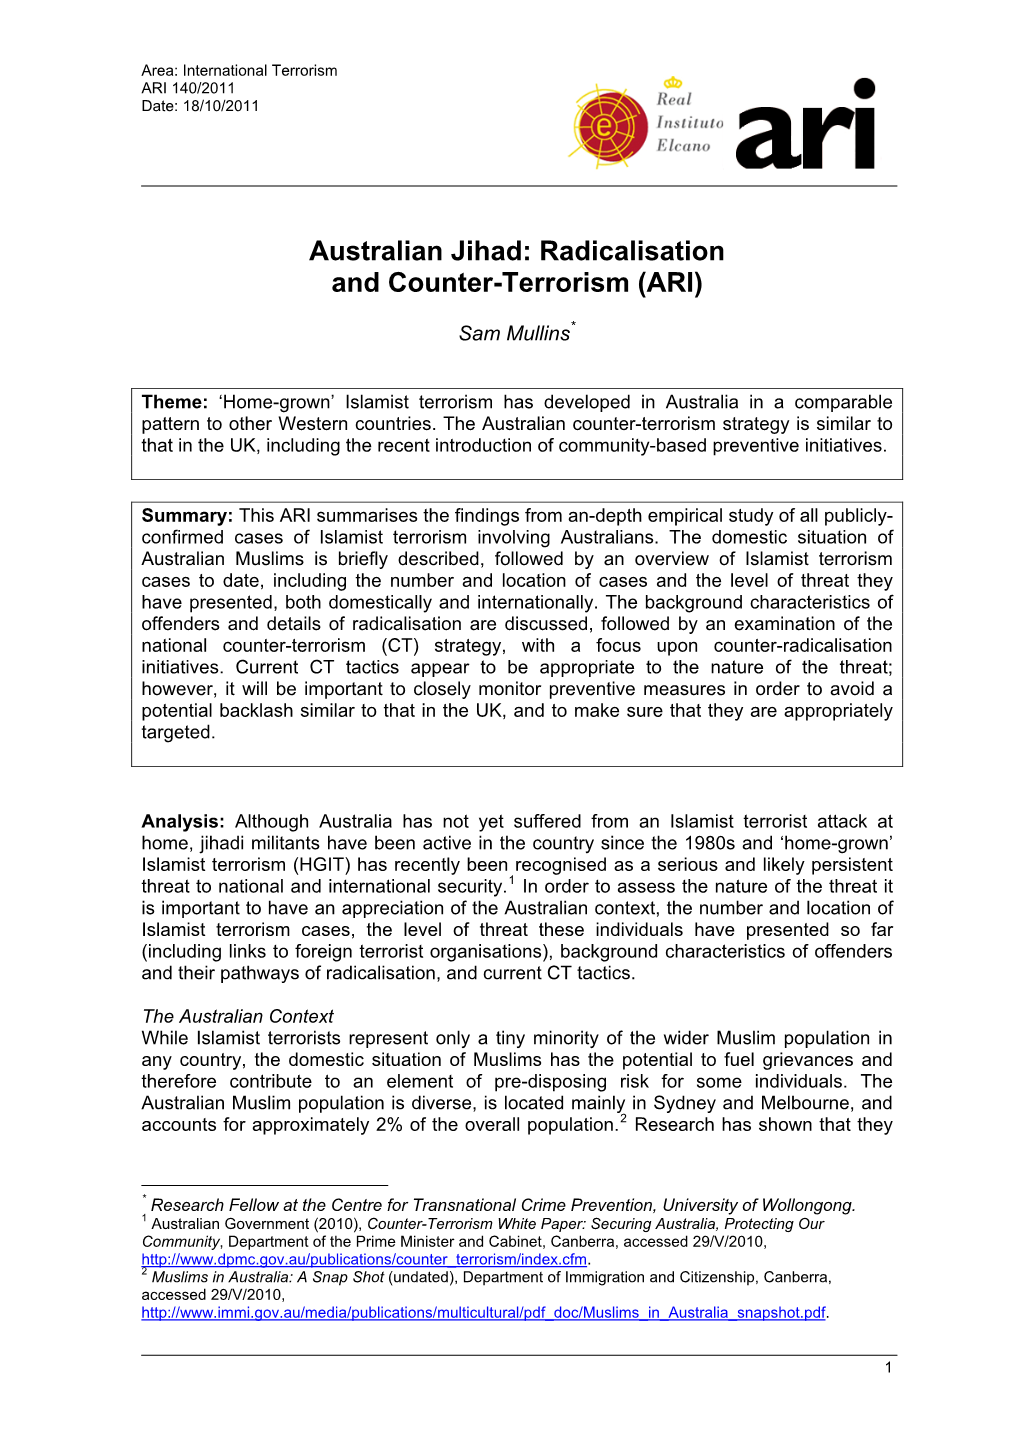 Australian Jihad: Radicalisation and Counter-Terrorism (ARI)